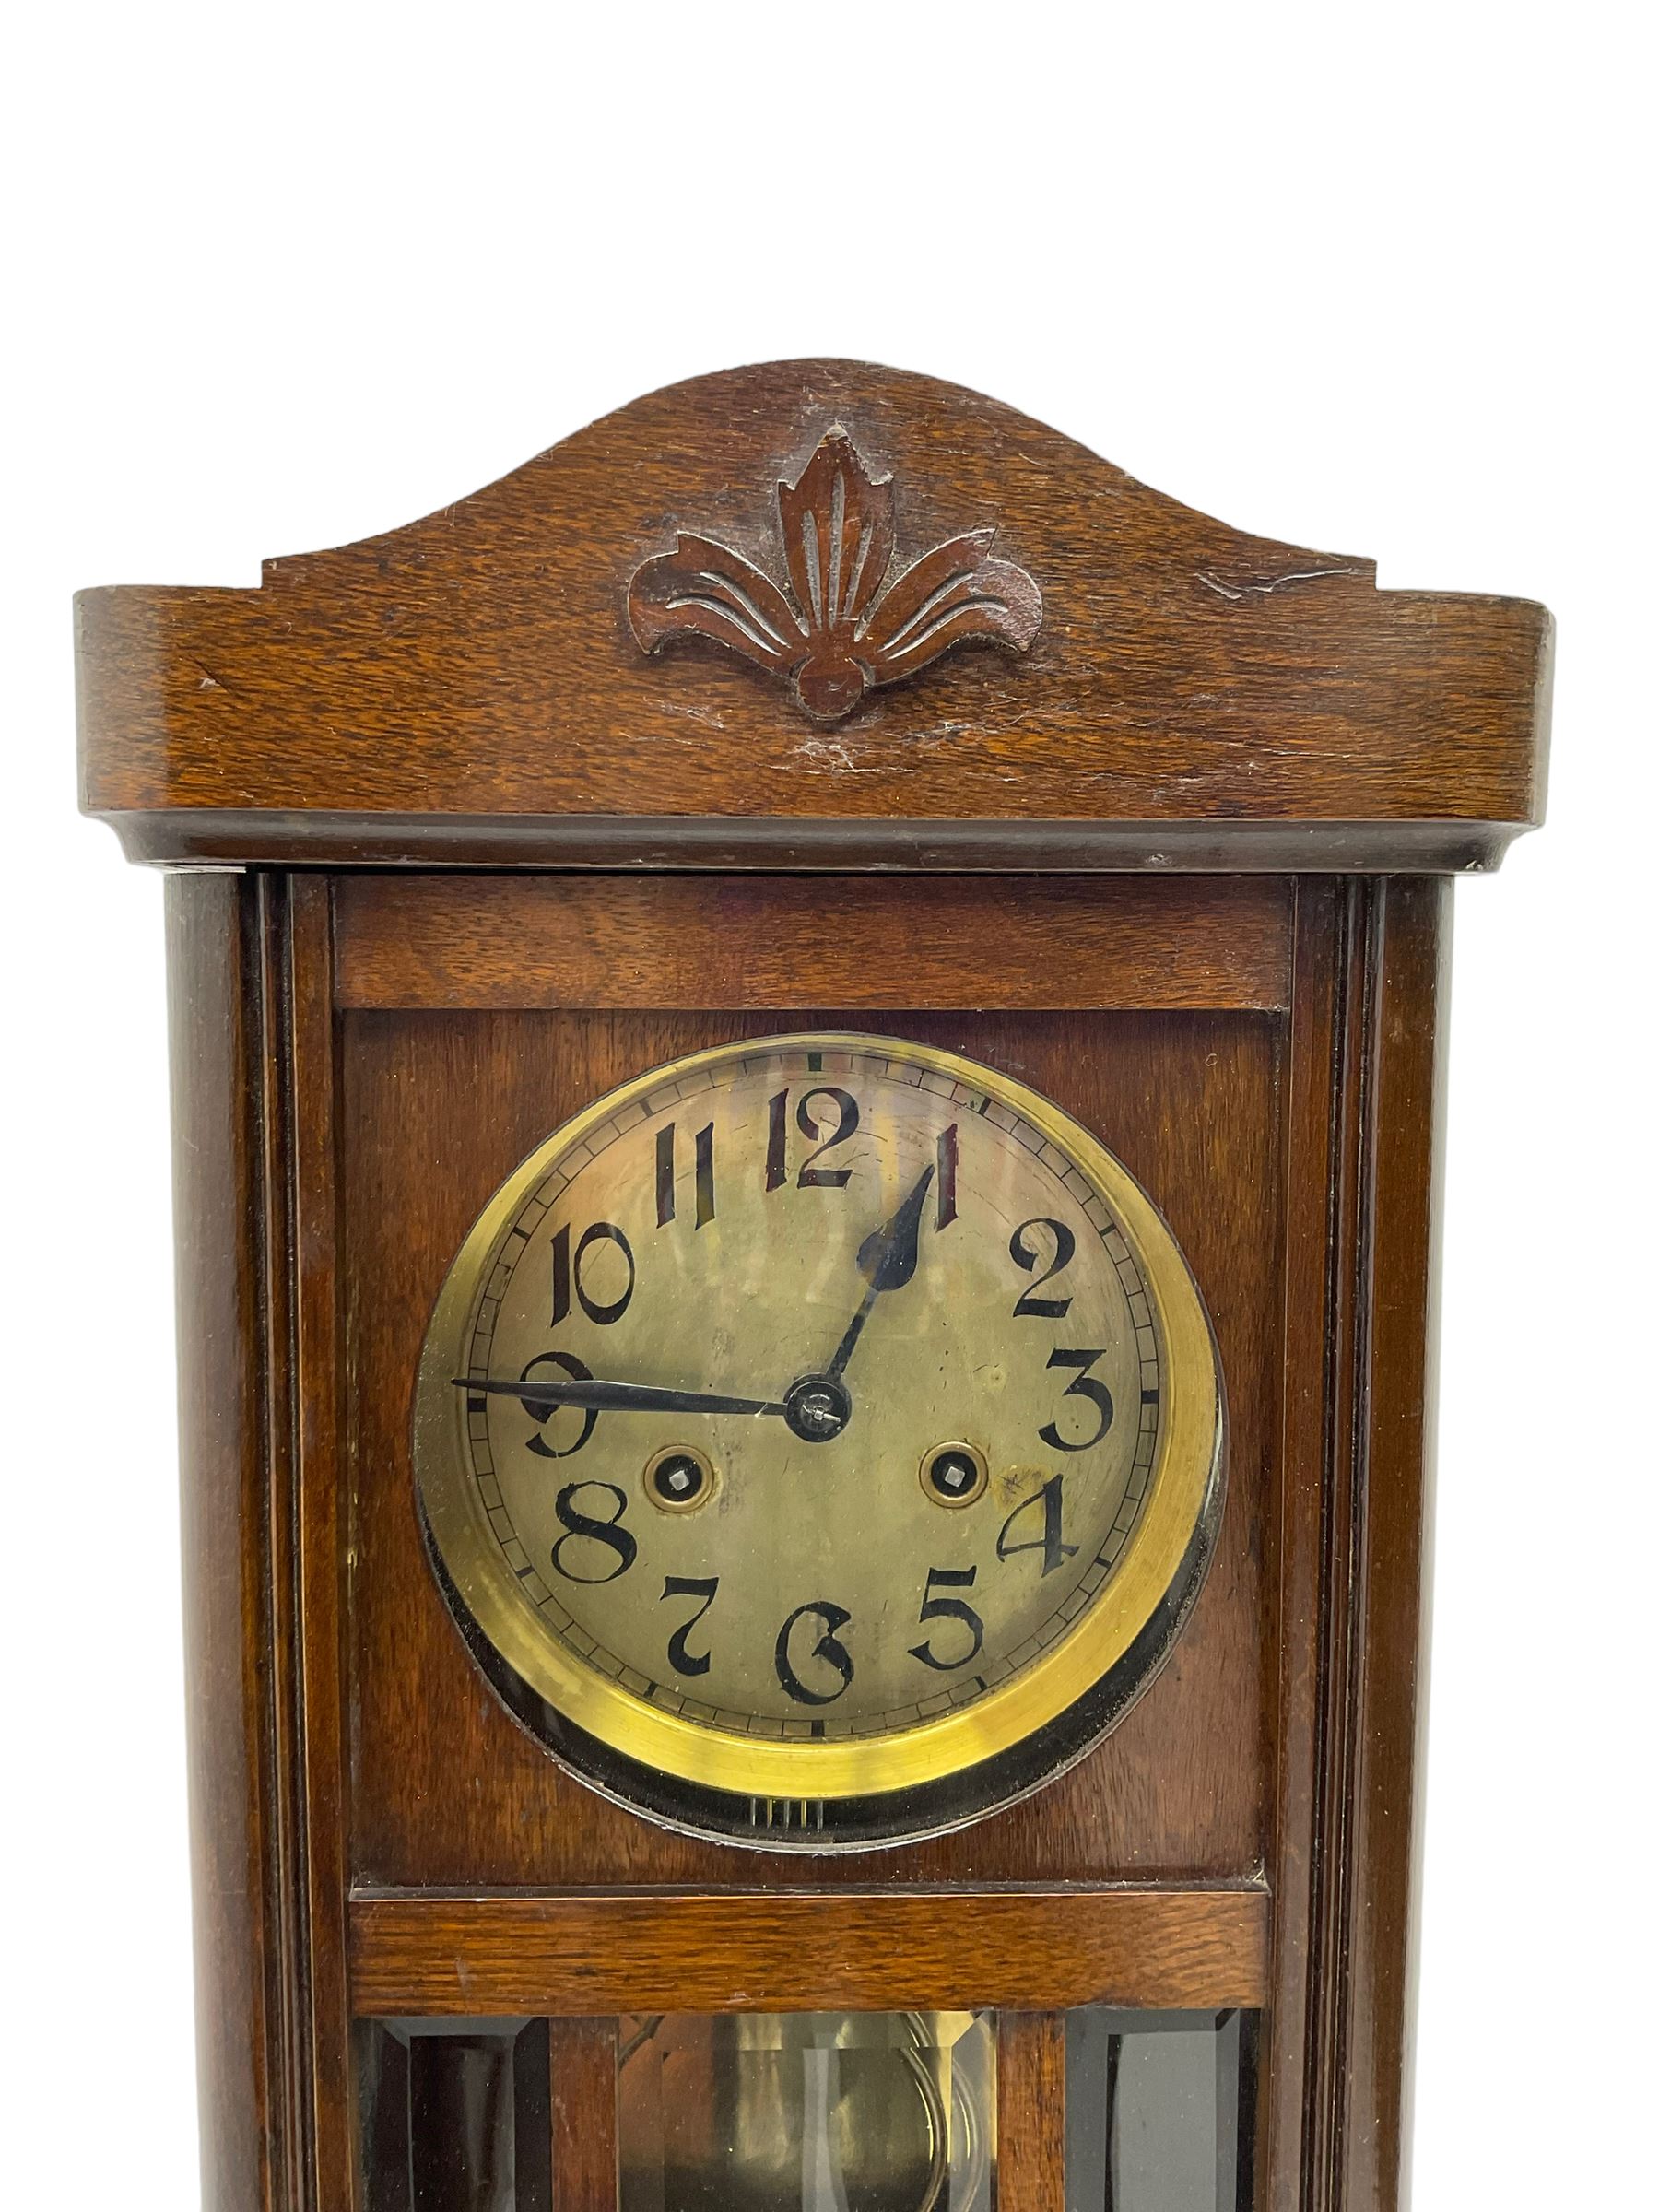 German -1930s oak wall clock - Image 3 of 3